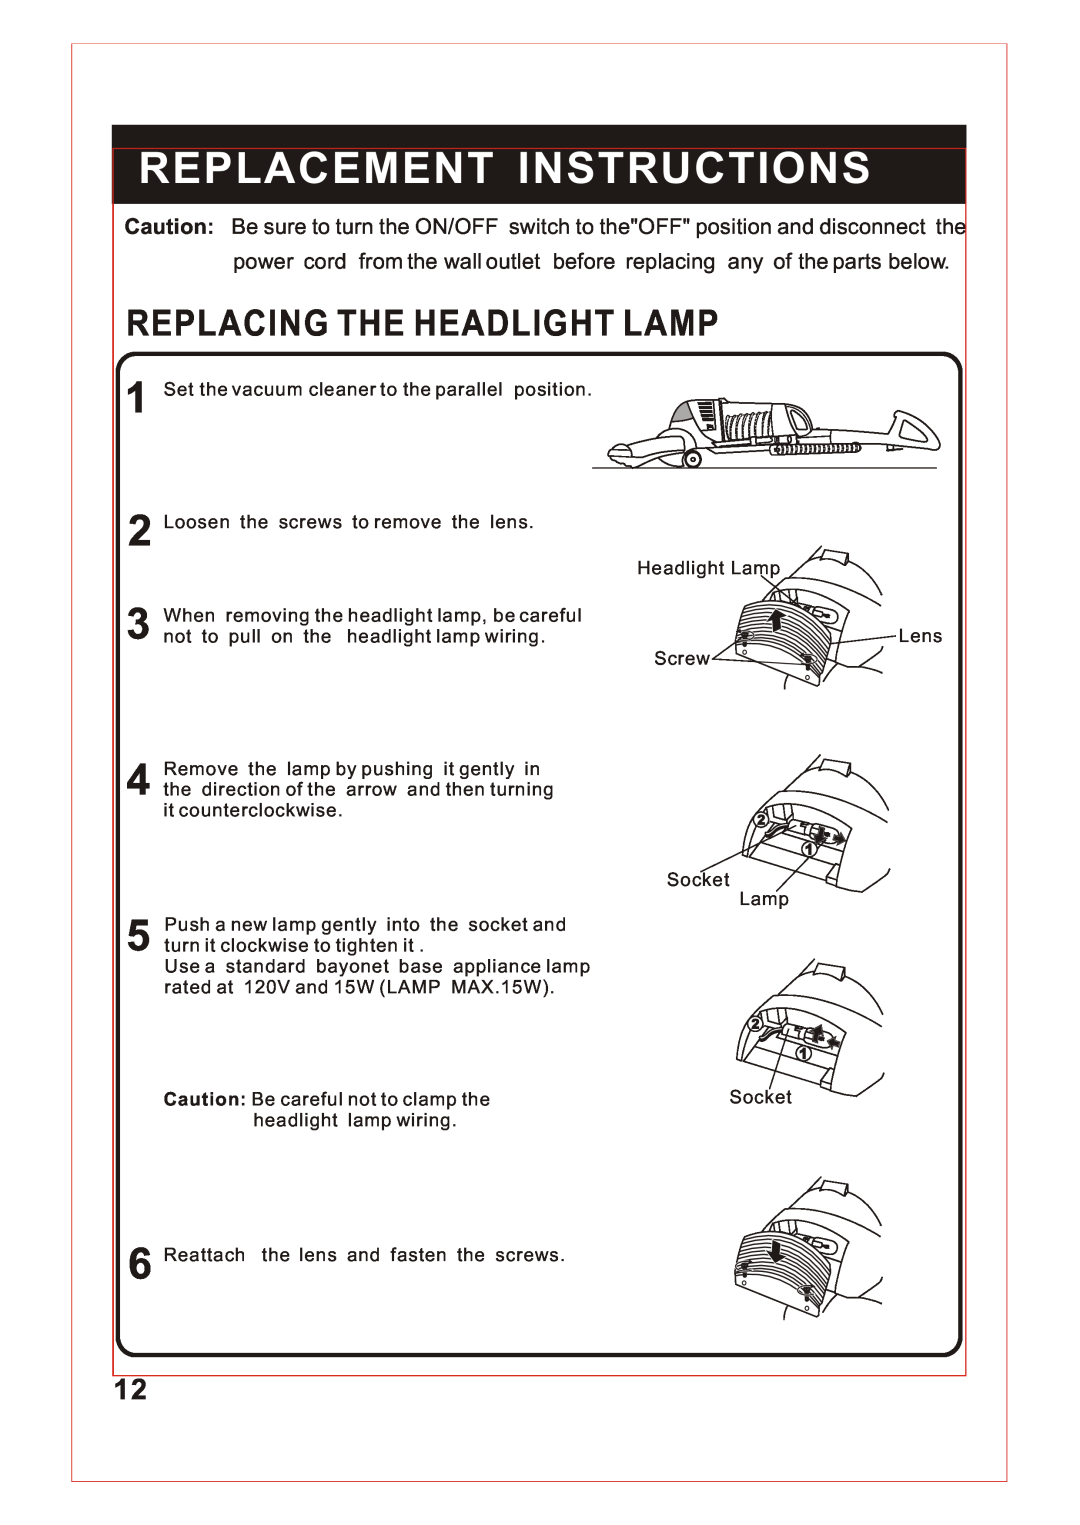 Fantom Vacuum FM740 instruction manual Replacement Instructions, Replacing The Headlight Lamp 